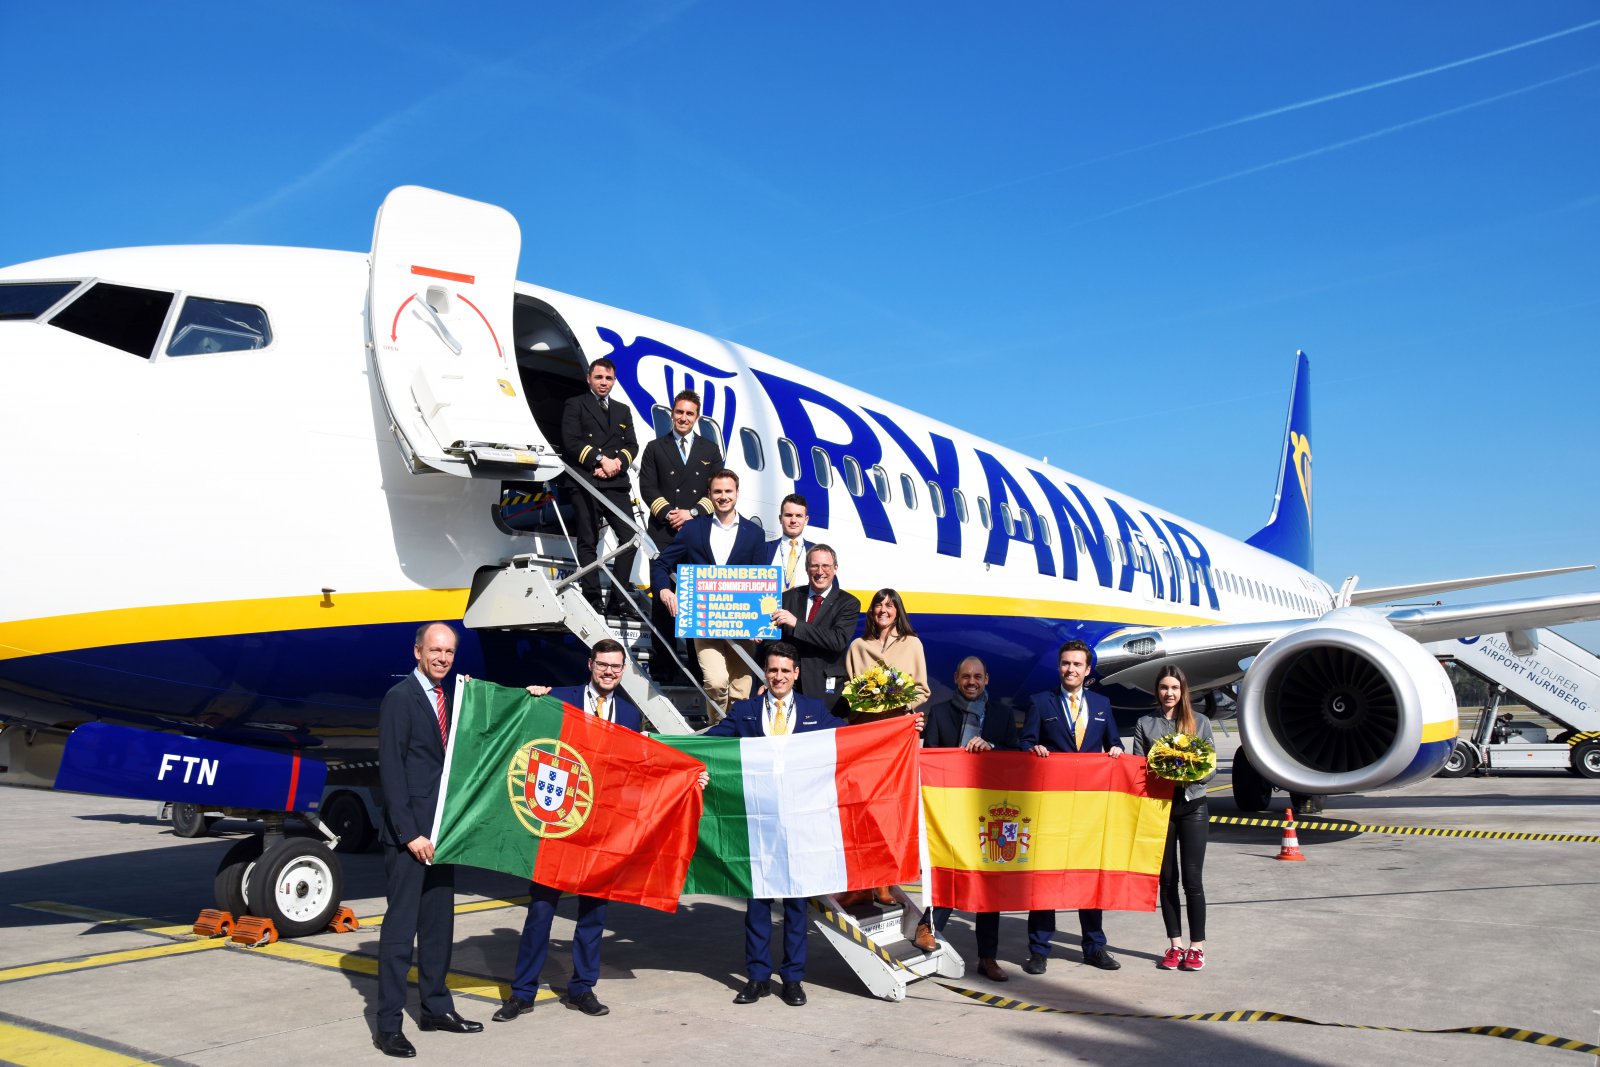 RYANAIR STARTET FÜNF NEUE SOMMERSTRECKEN AB NÜRNBERG – Ryanair's